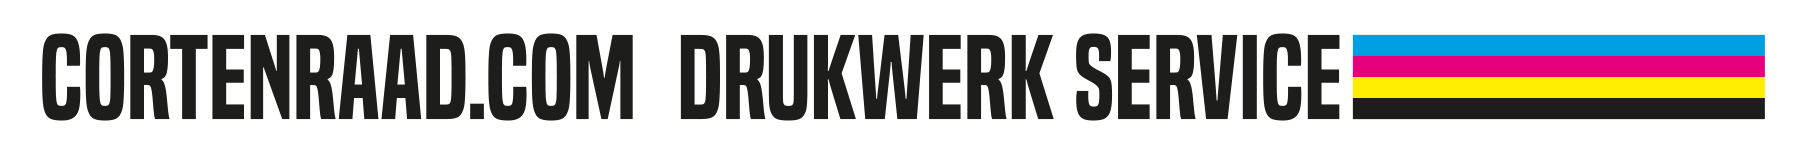 logo Cortenraad Drukwerk Service